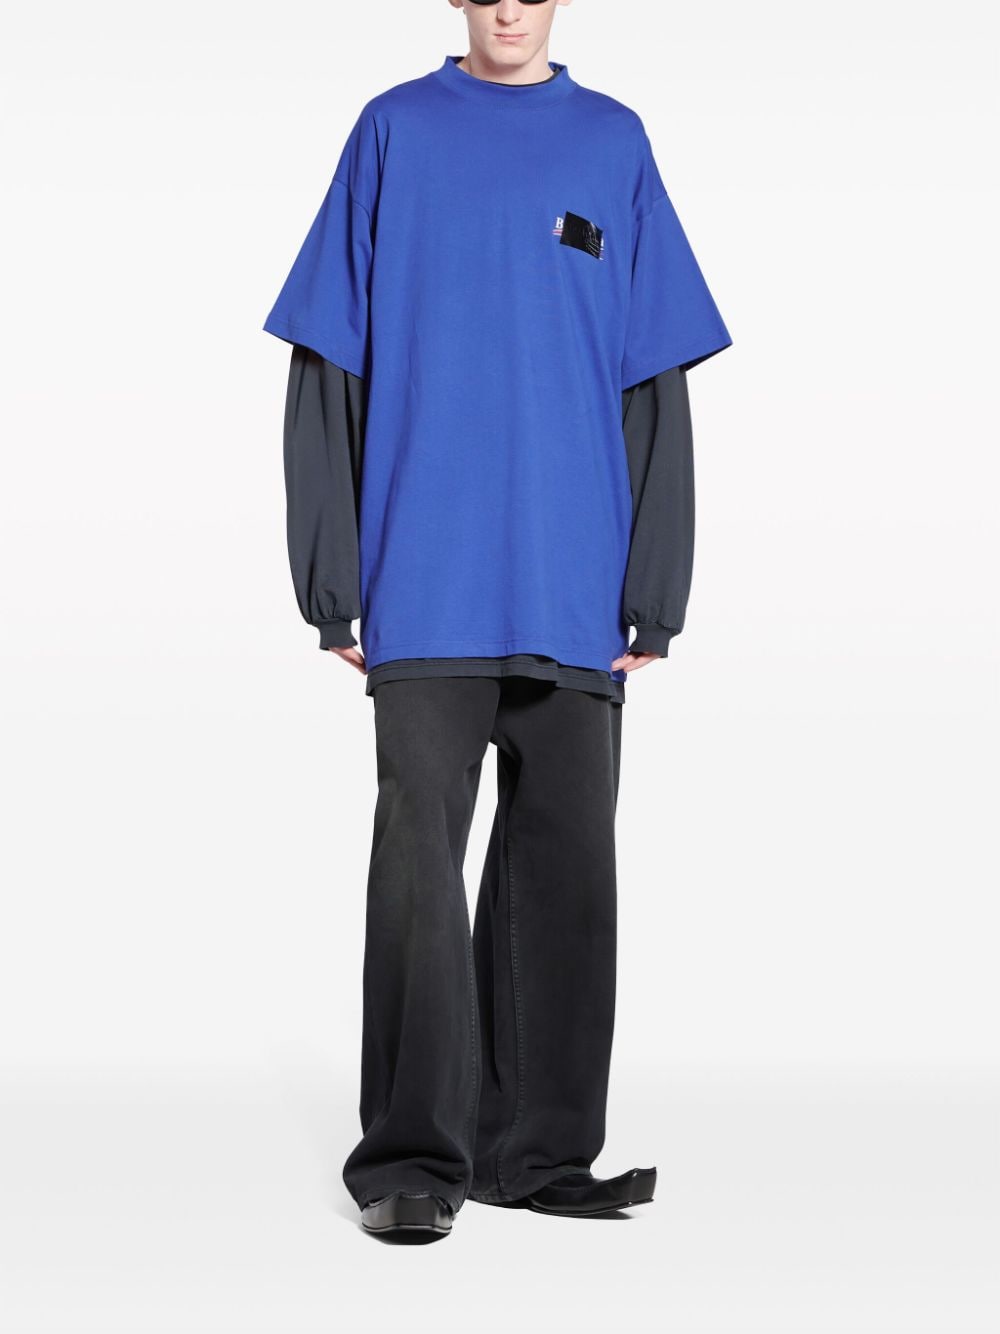 Balenciaga Oversized T-shirt - Blauw